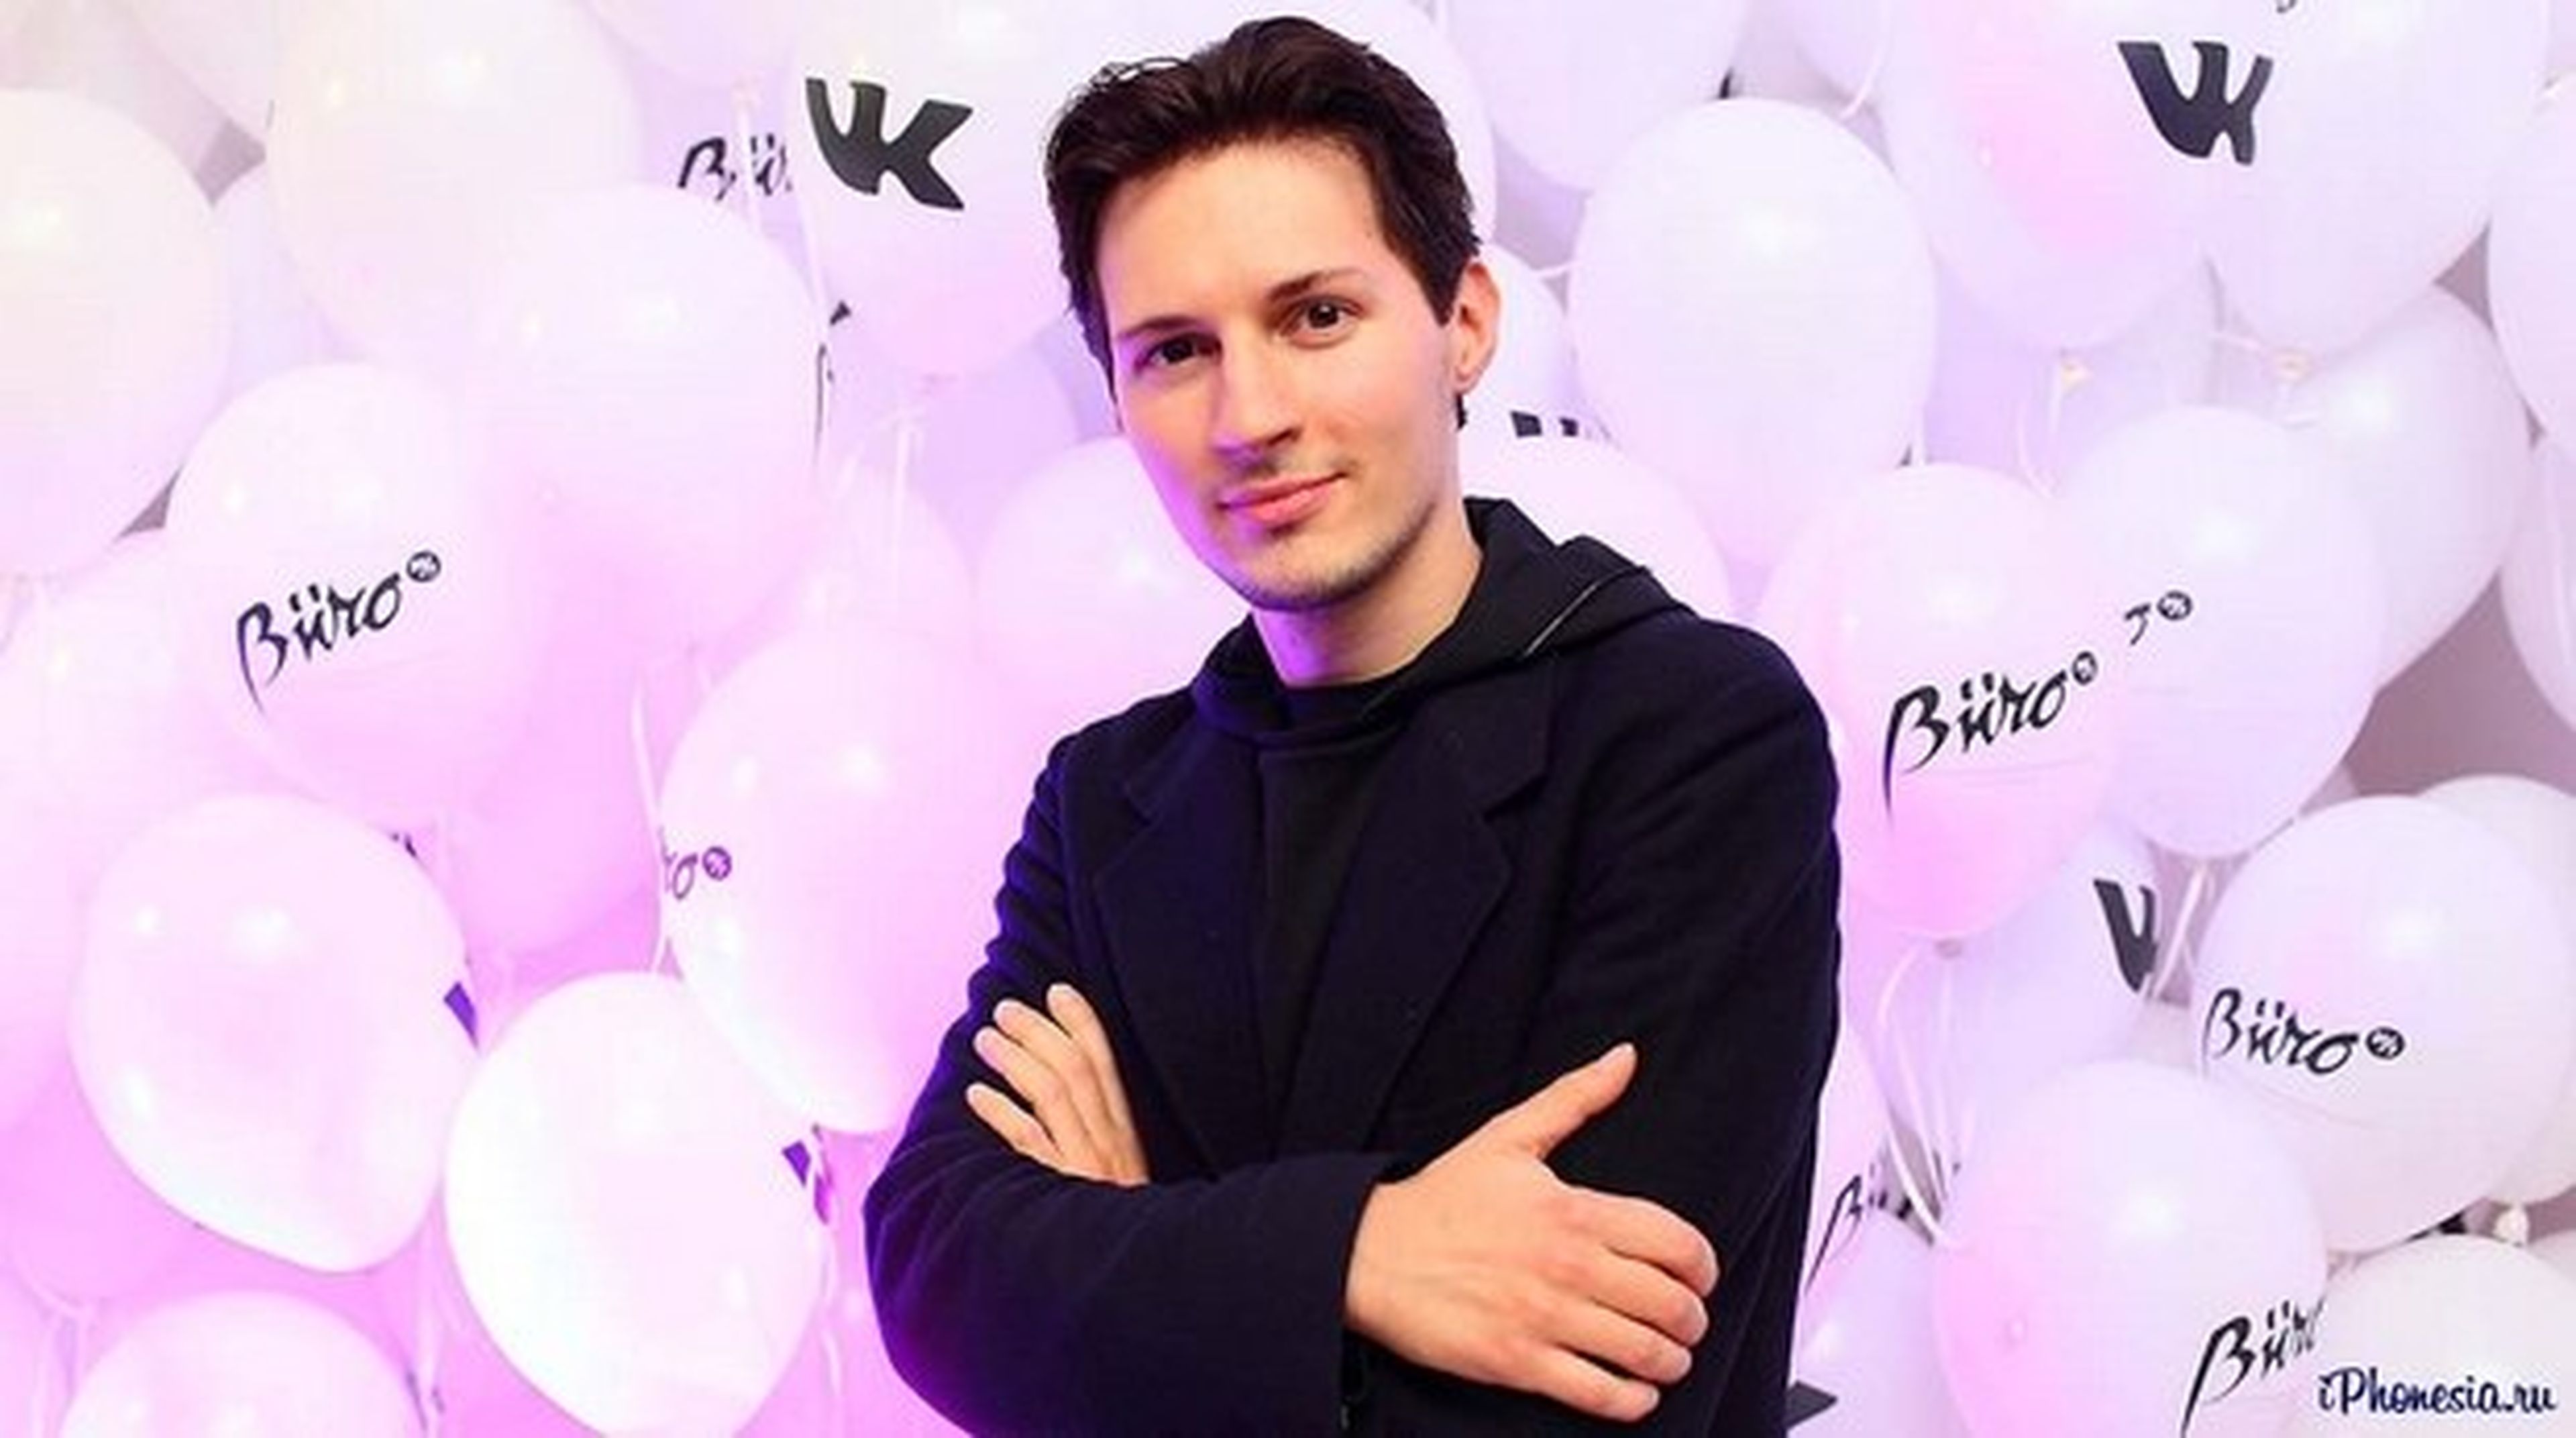 Las excentricidades de Pavel Durov